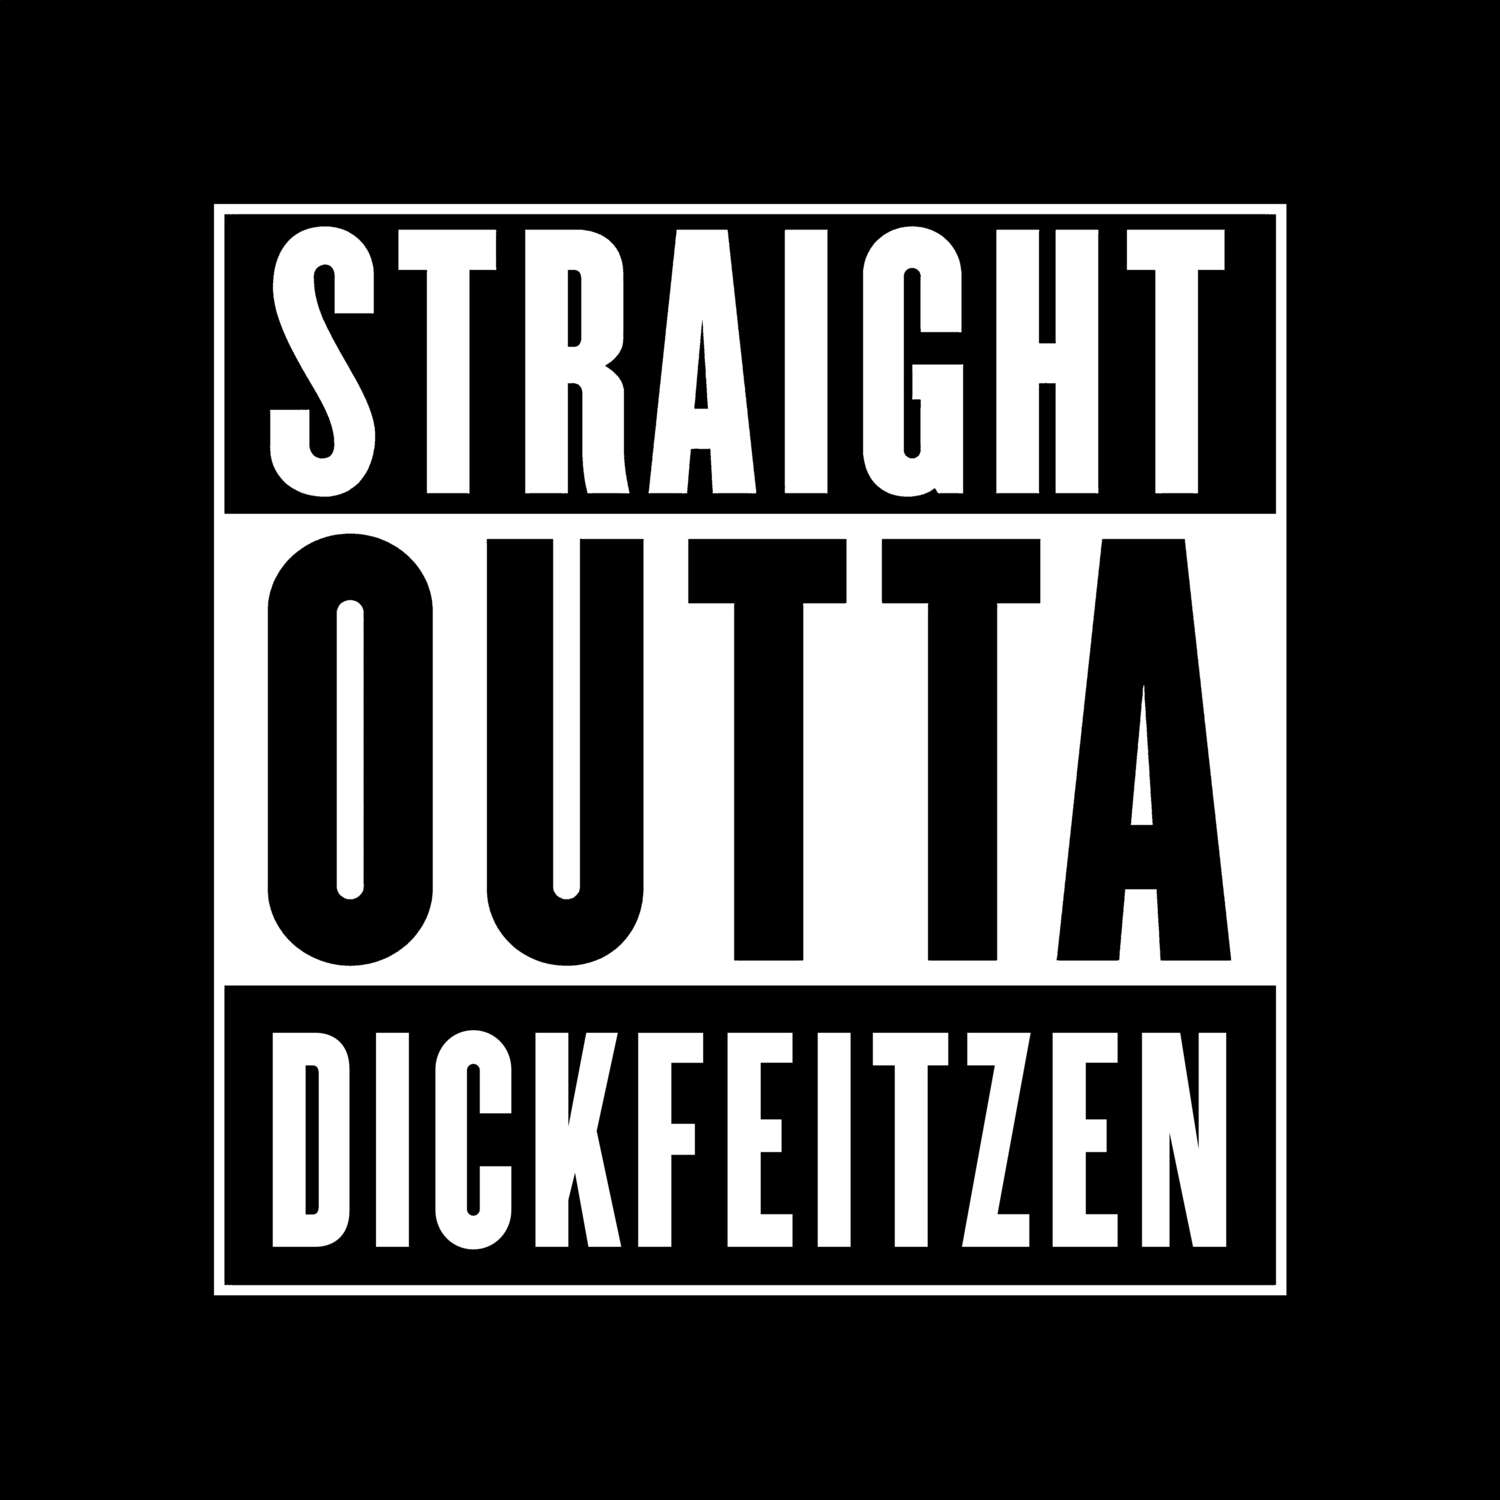 Dickfeitzen T-Shirt »Straight Outta«